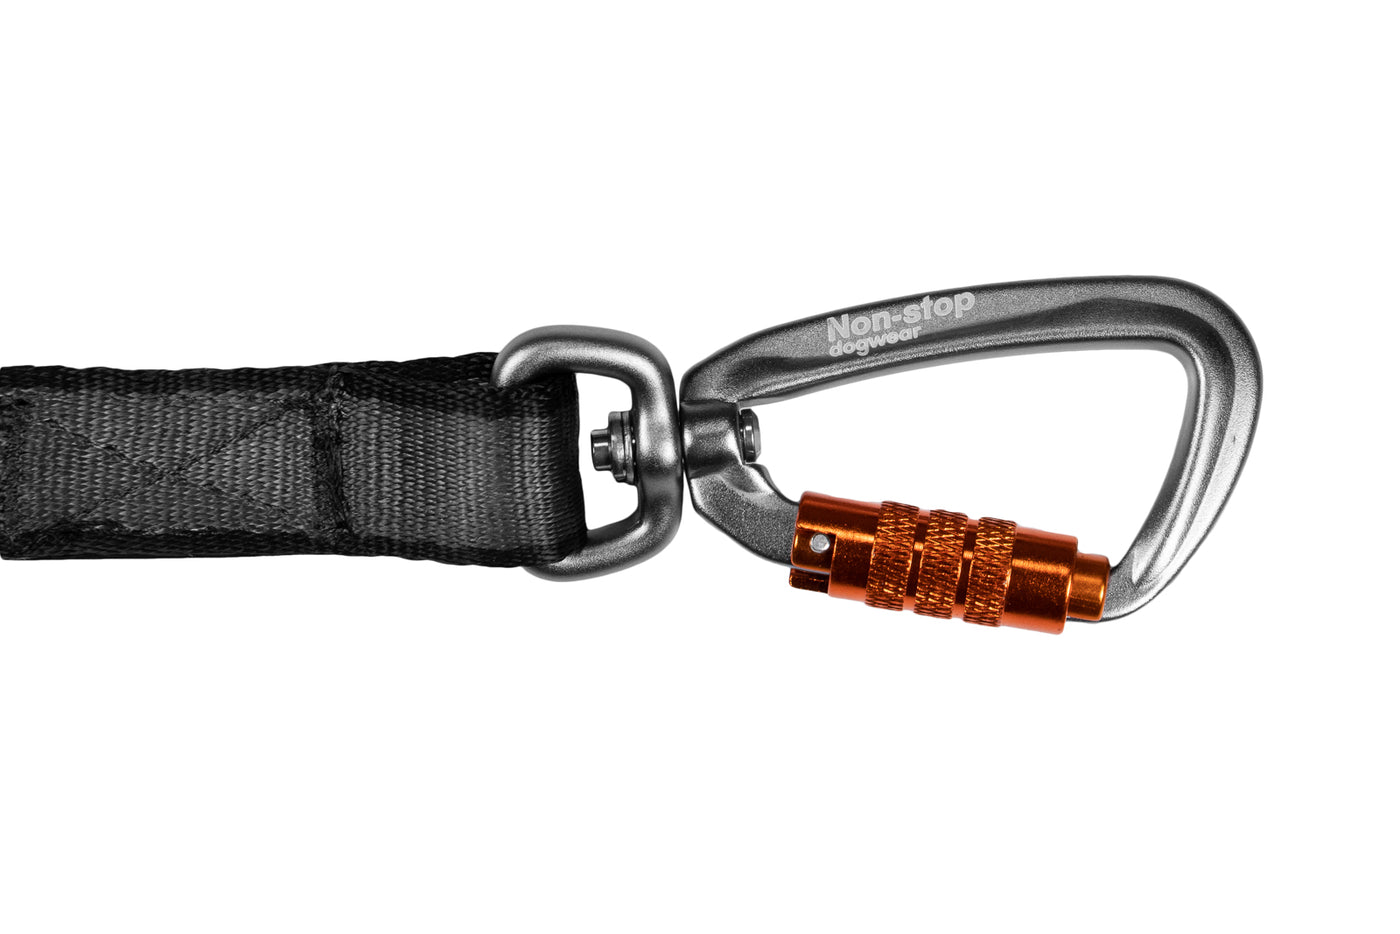 Mosquetón Twist-lock move leash non-stop dogwear